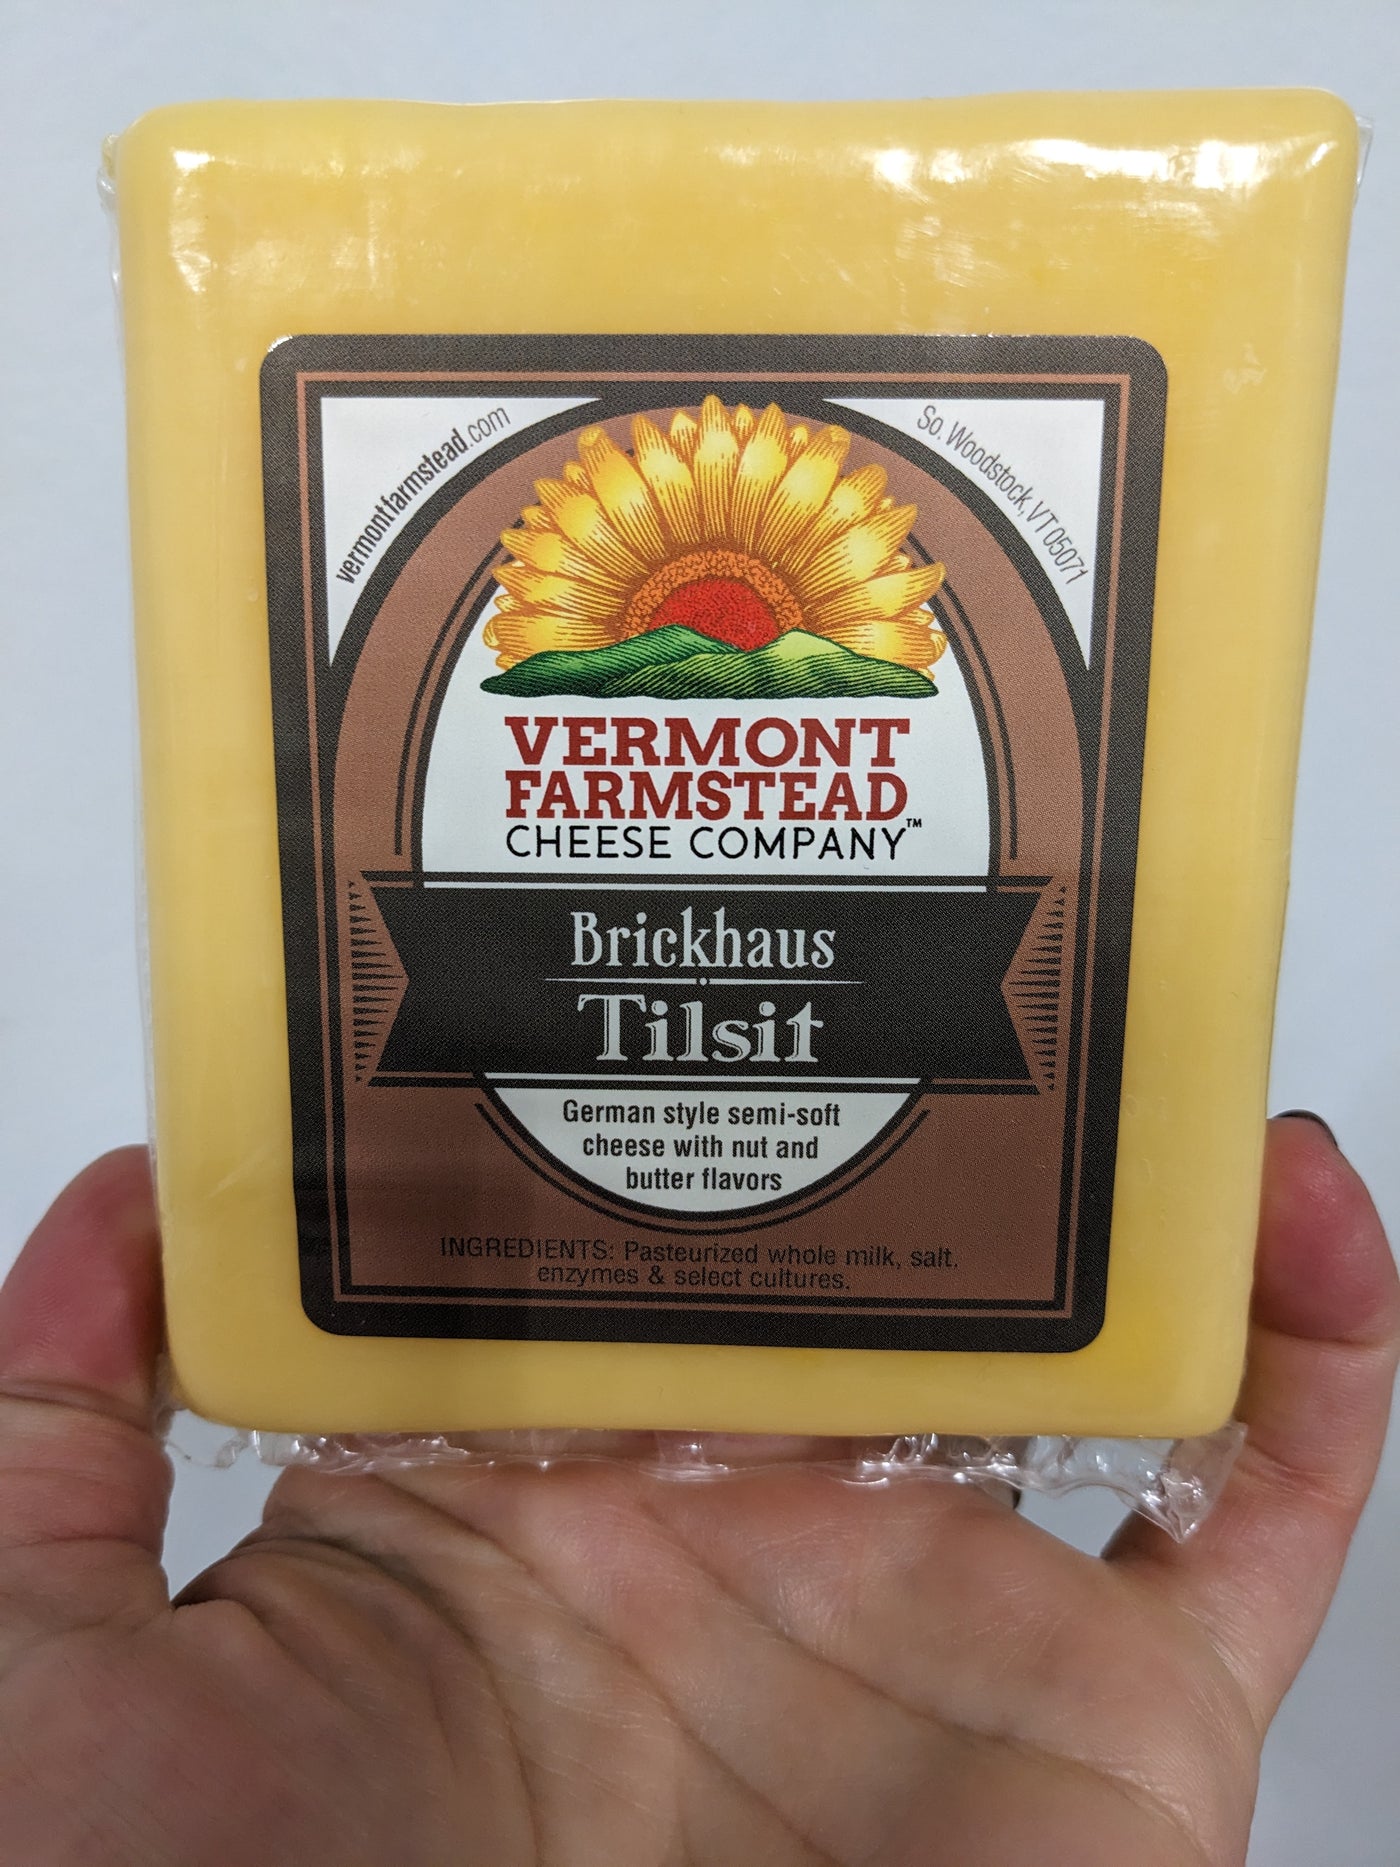 BrickHaus Tilsit - VT Farmstead Cheese Co.